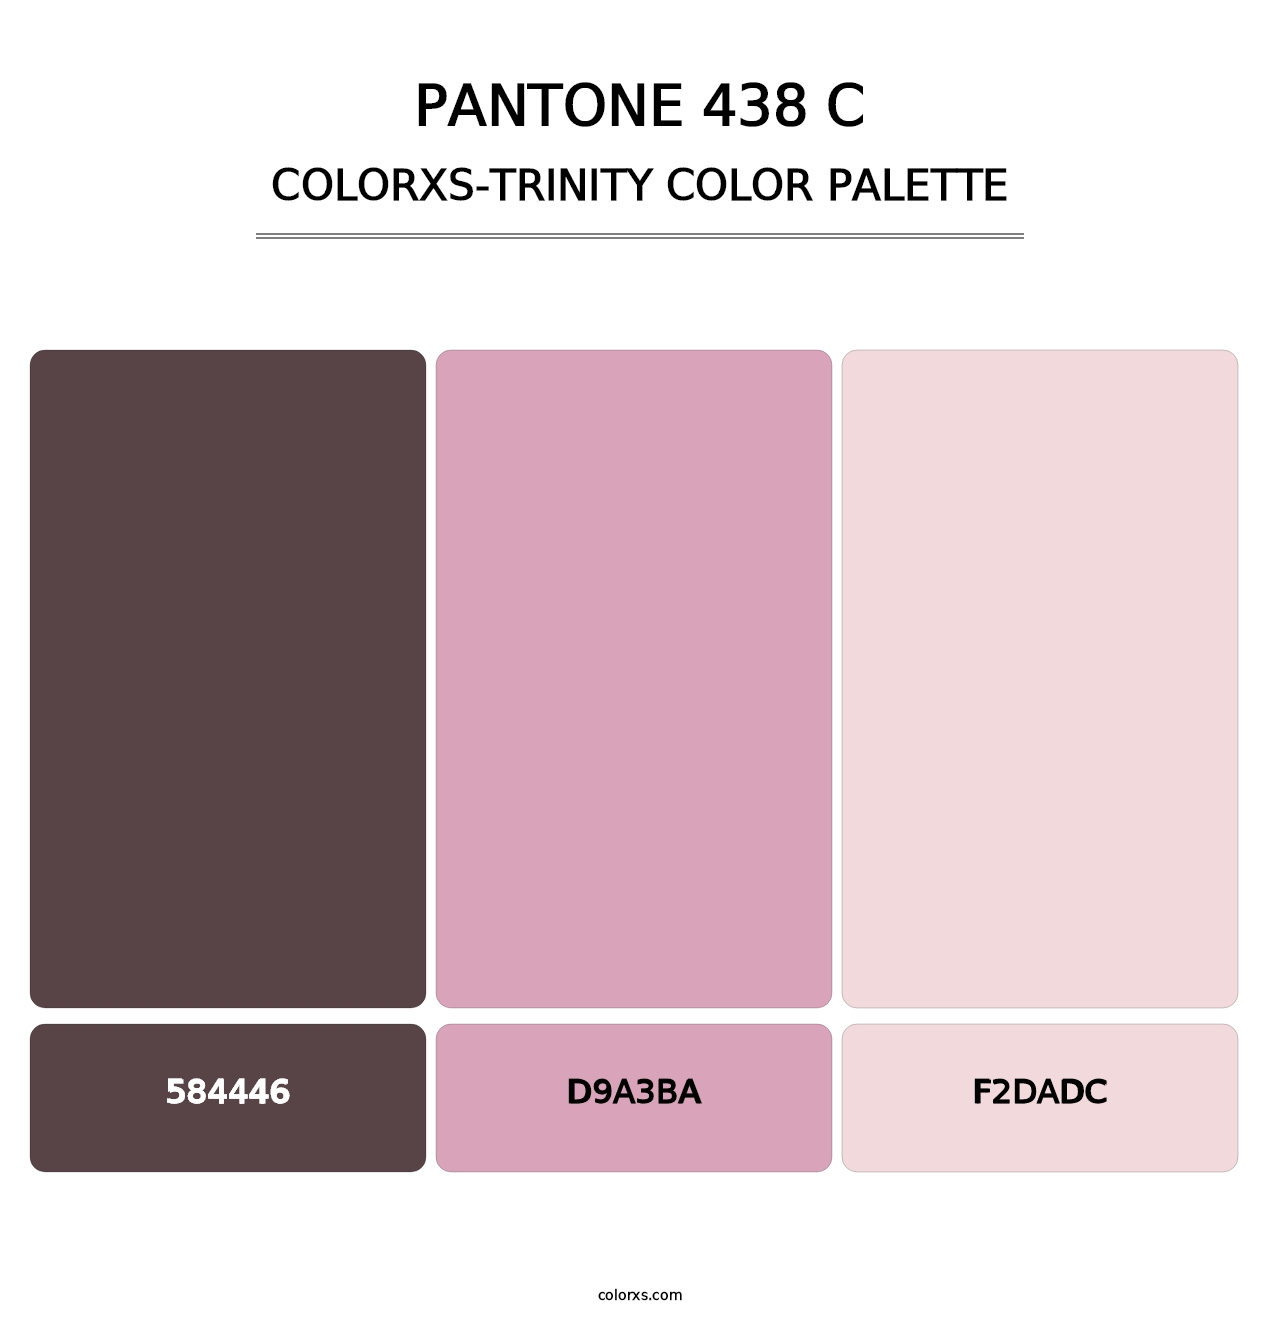 PANTONE 438 C - Colorxs Trinity Palette